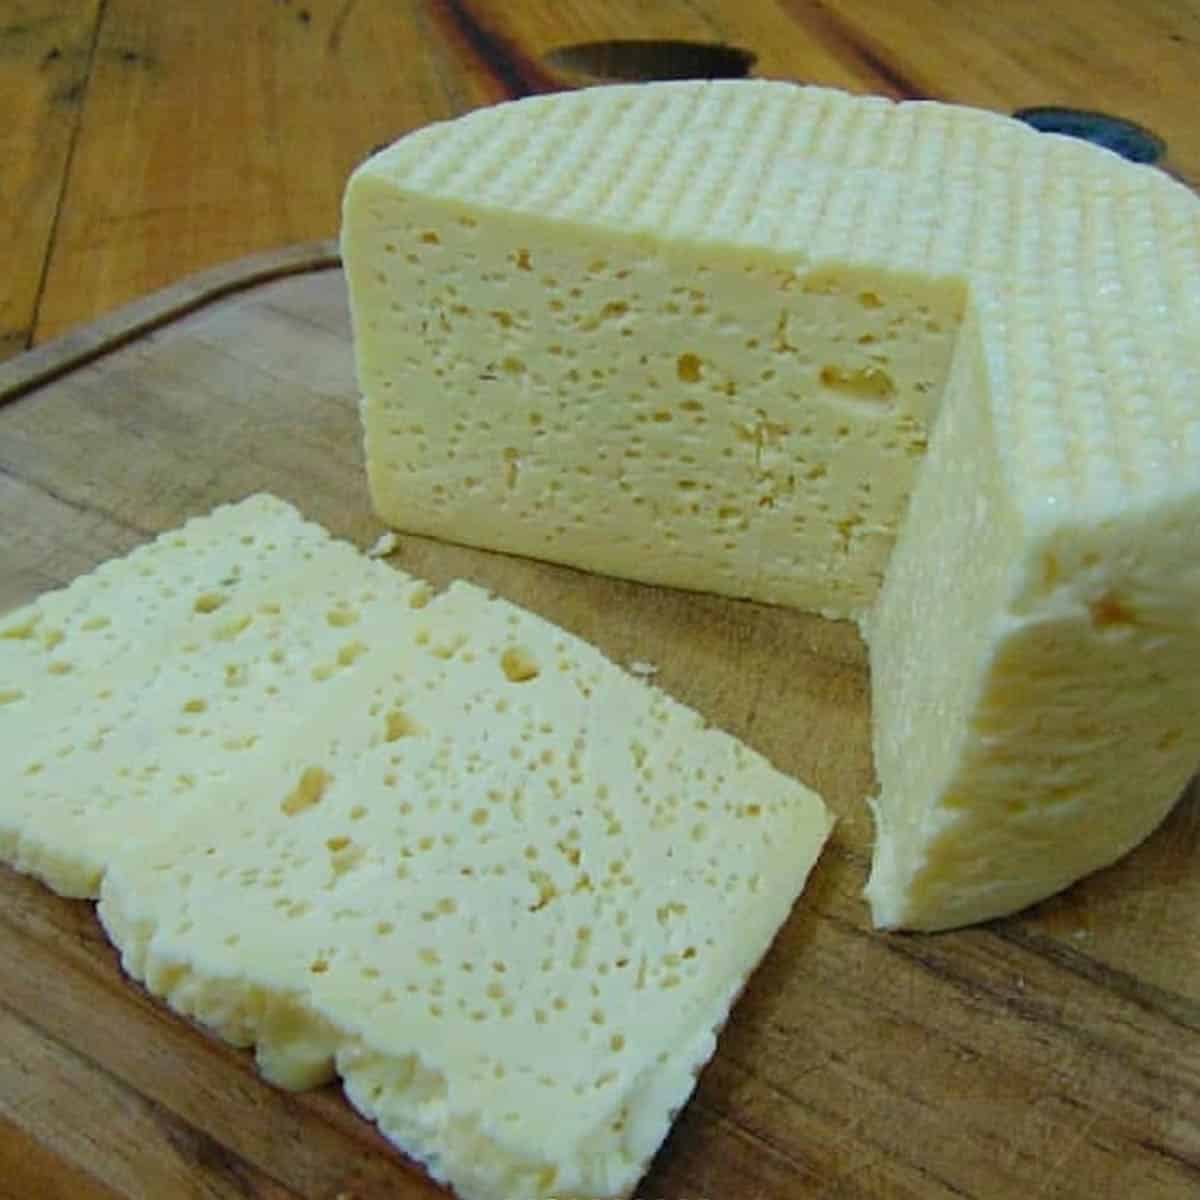 queijo branco